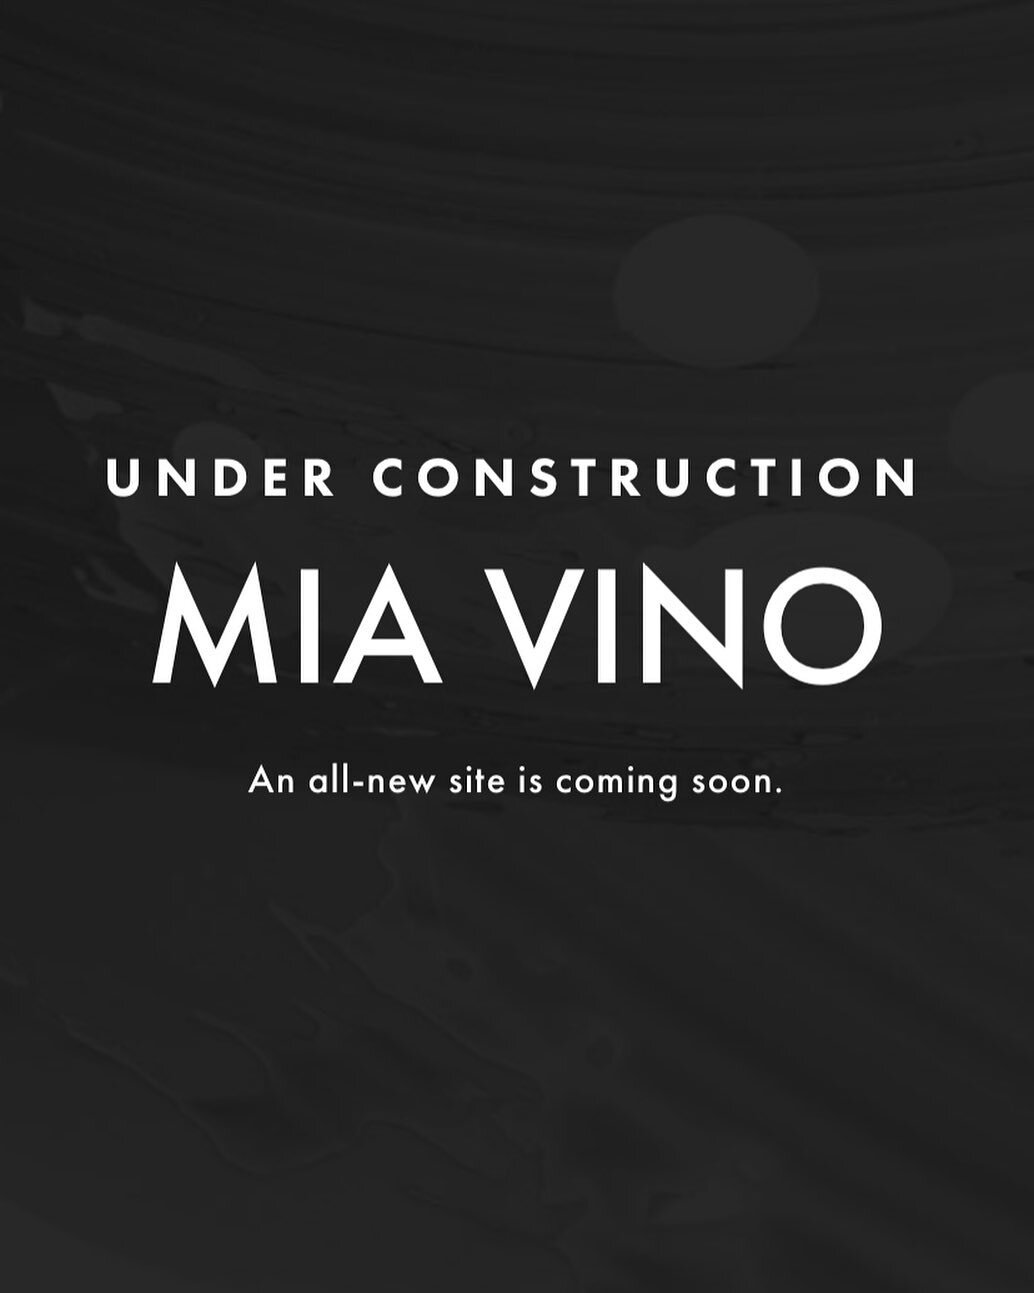 All new Mia Vino website and some exciting news coming soon! Keep checking our socials for updates 🍾
.
.
.
.
.
🇮🇹 
#italianwine #wine #miavino #italianfood #italian #scotland #glasgow #northlanarkshire #italy #italy🇮🇹 #italianrestaurant #vineyar